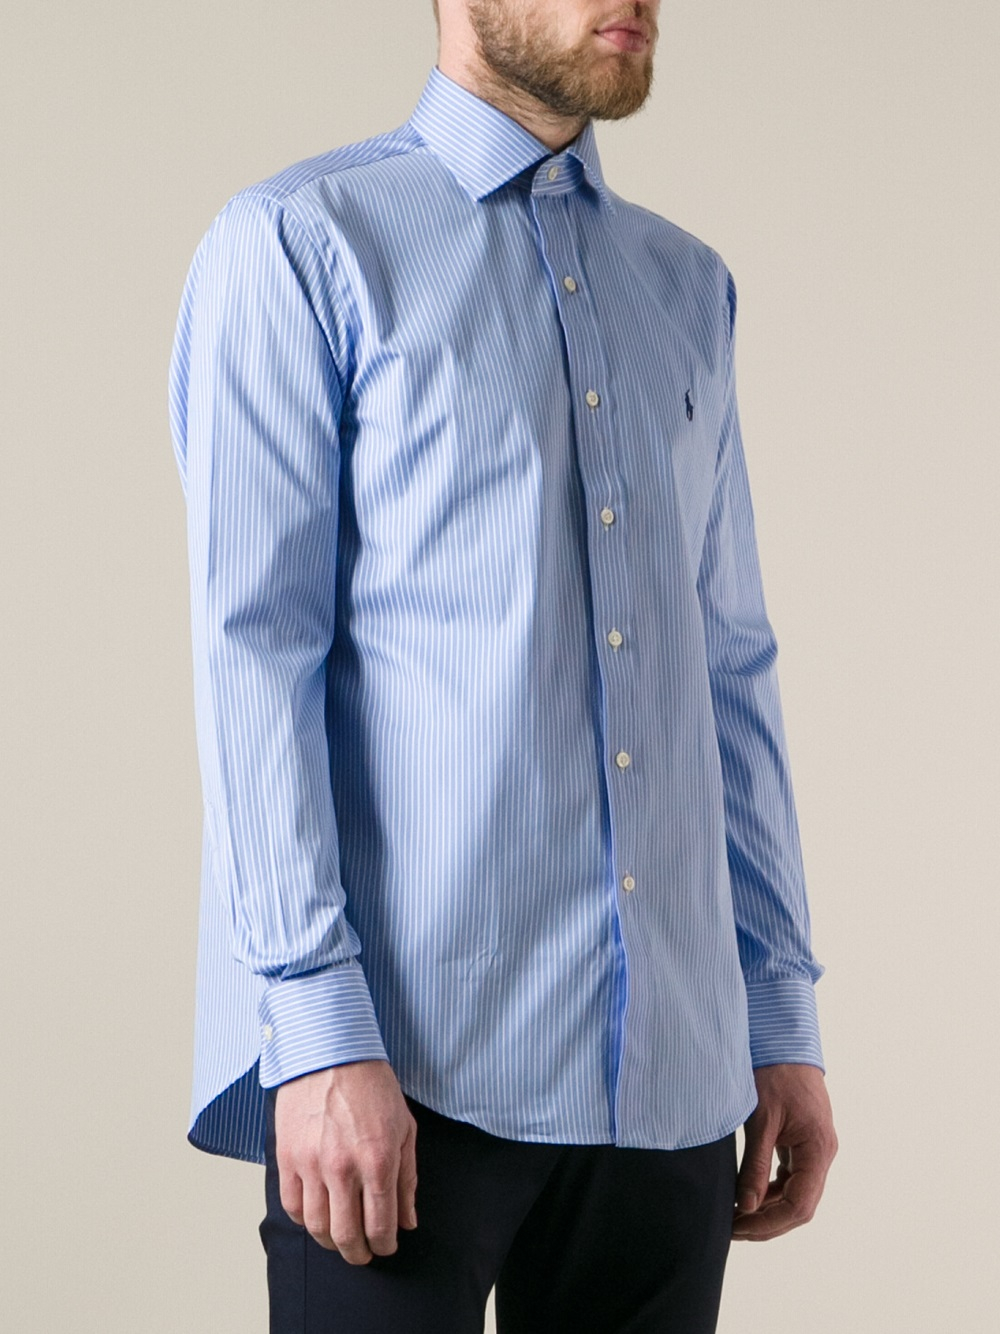 Lyst - Polo Ralph Lauren Striped Dress Shirt in Blue for Men